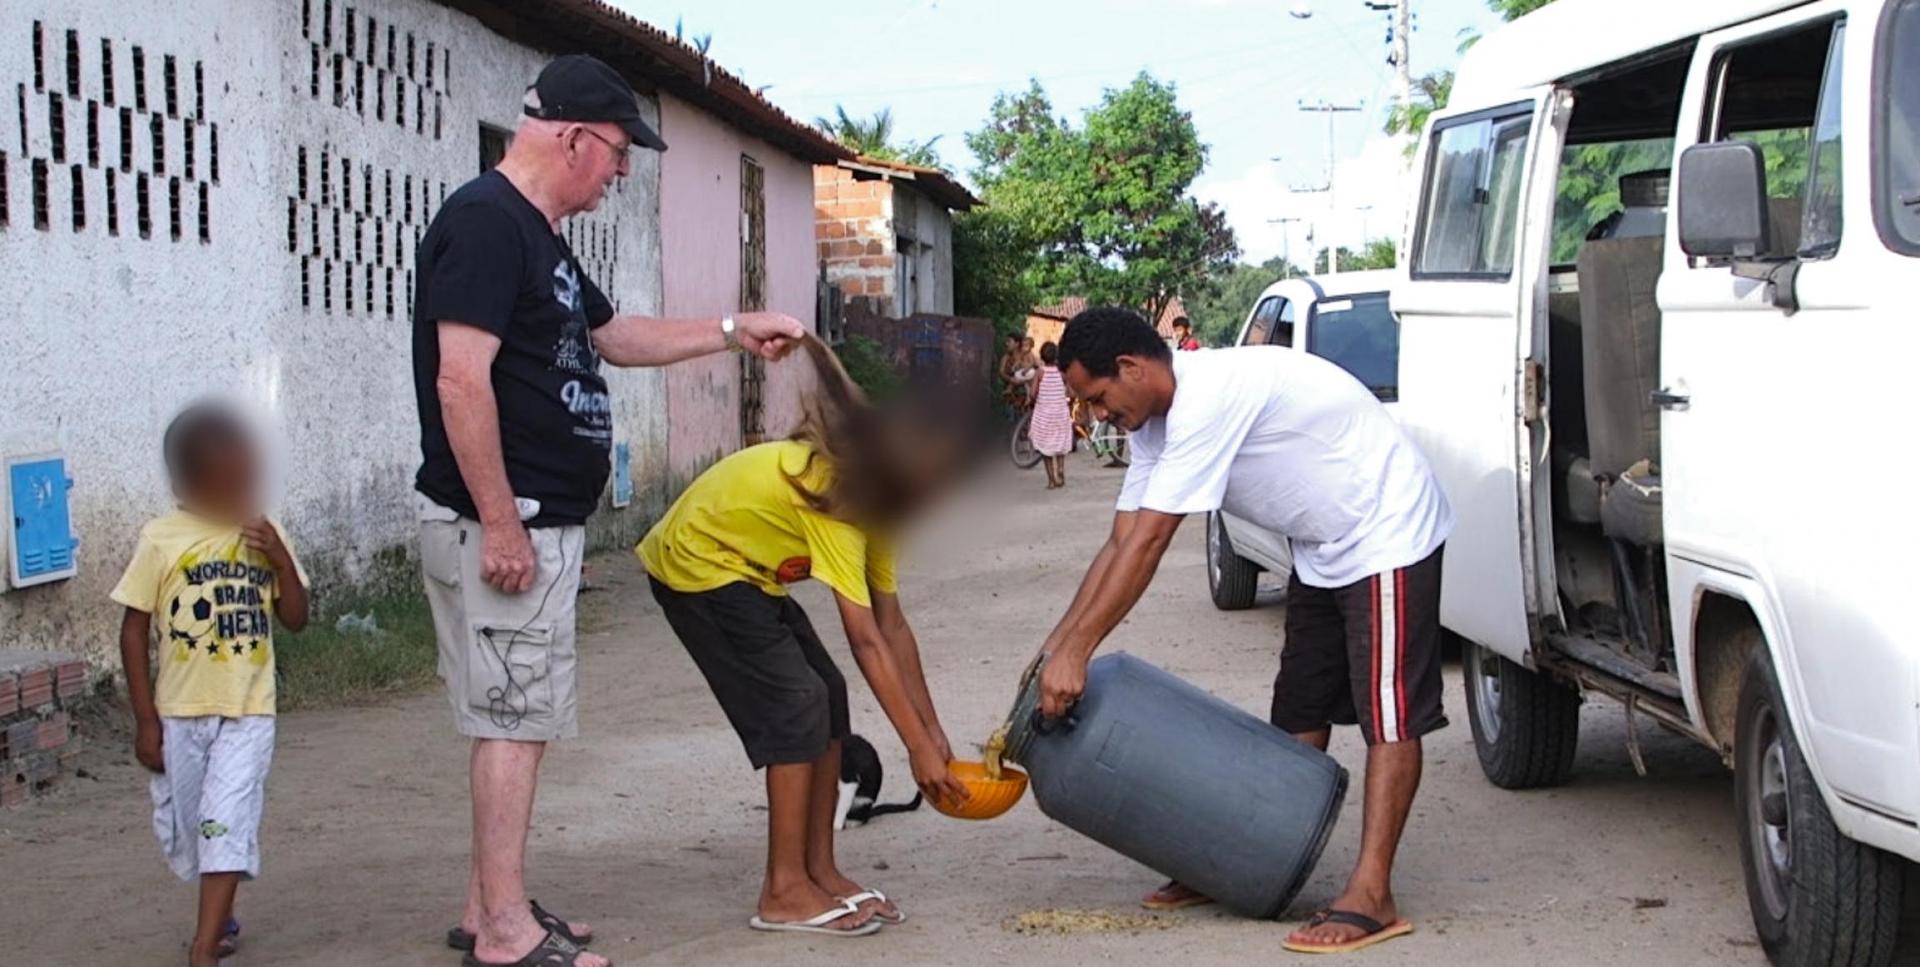 Priest Jan Van Dael touching a boy's hair in Brazil